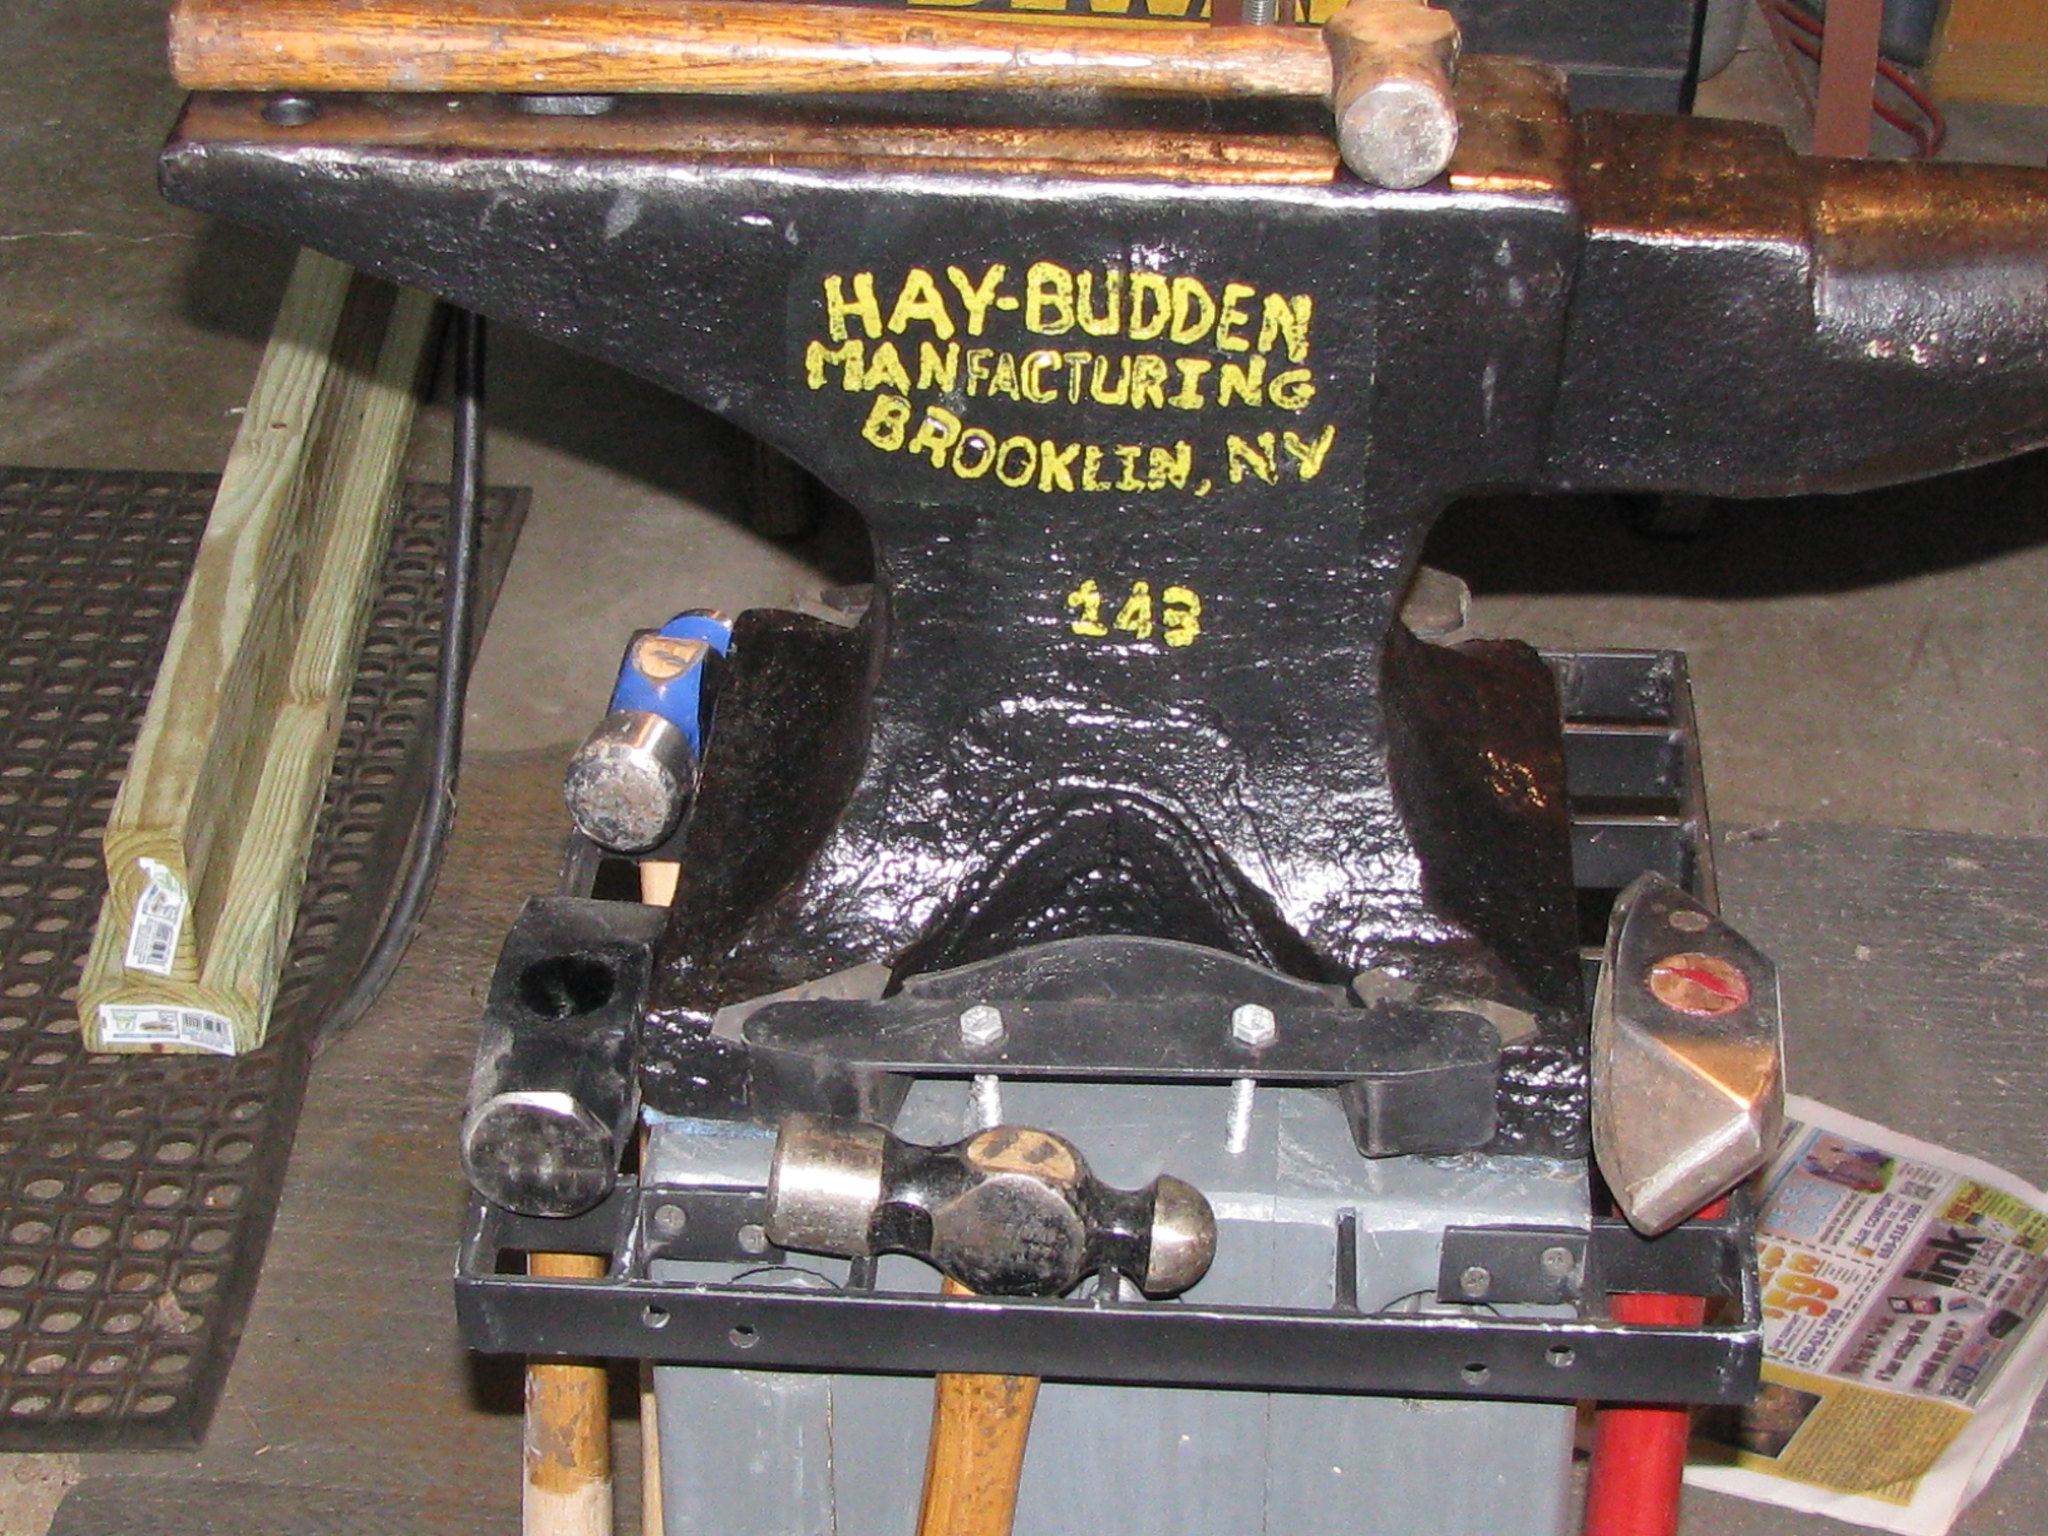 trenton anvil serial numbers